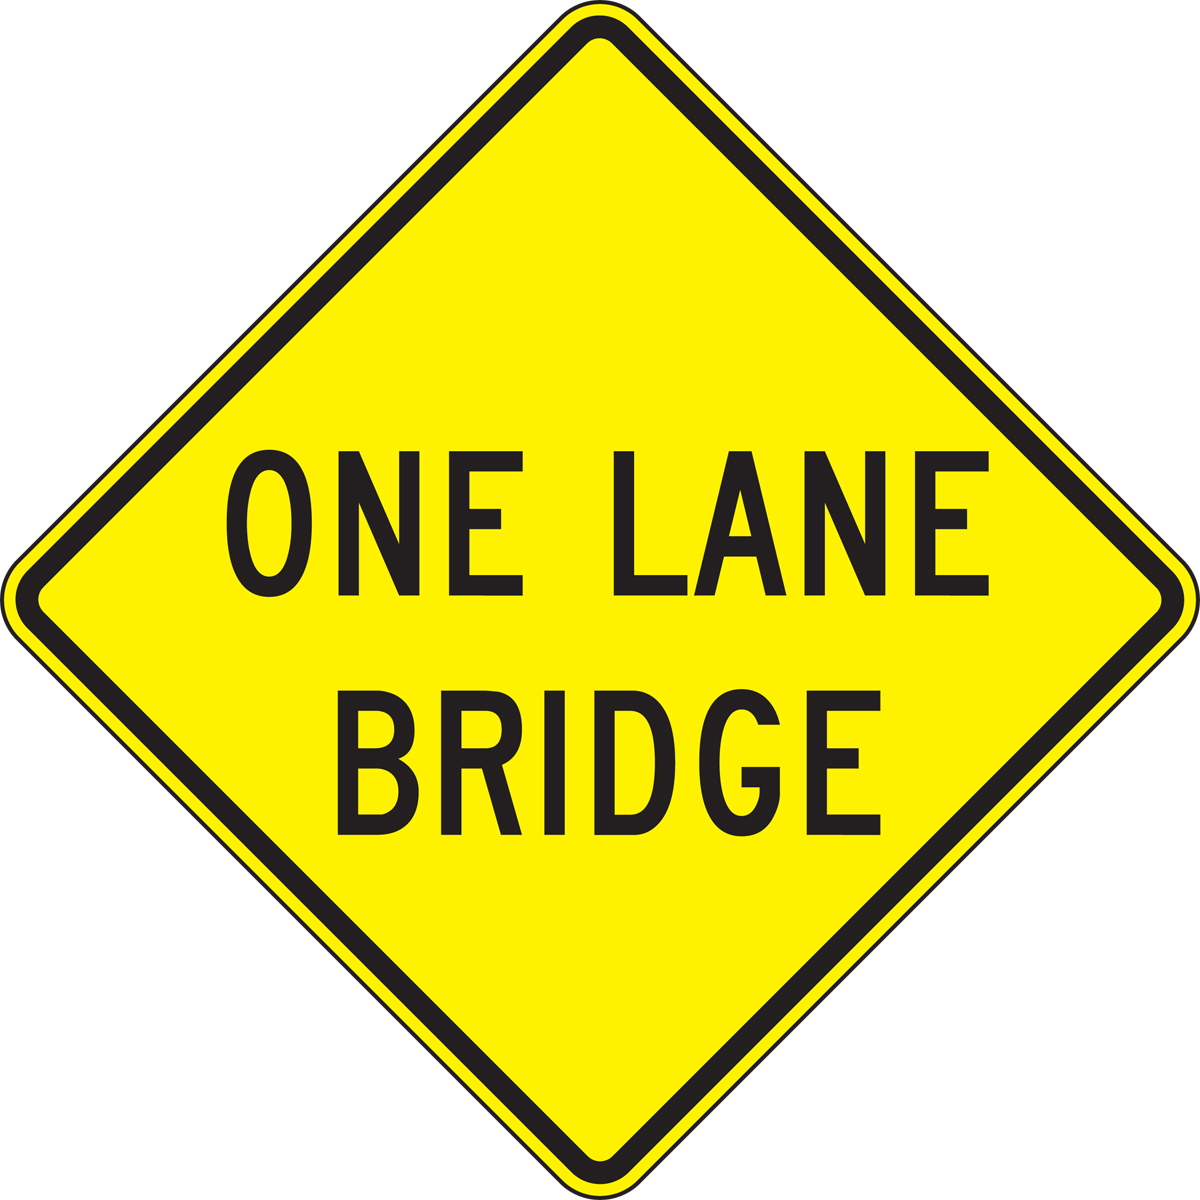 ONE LANE BRIDGE